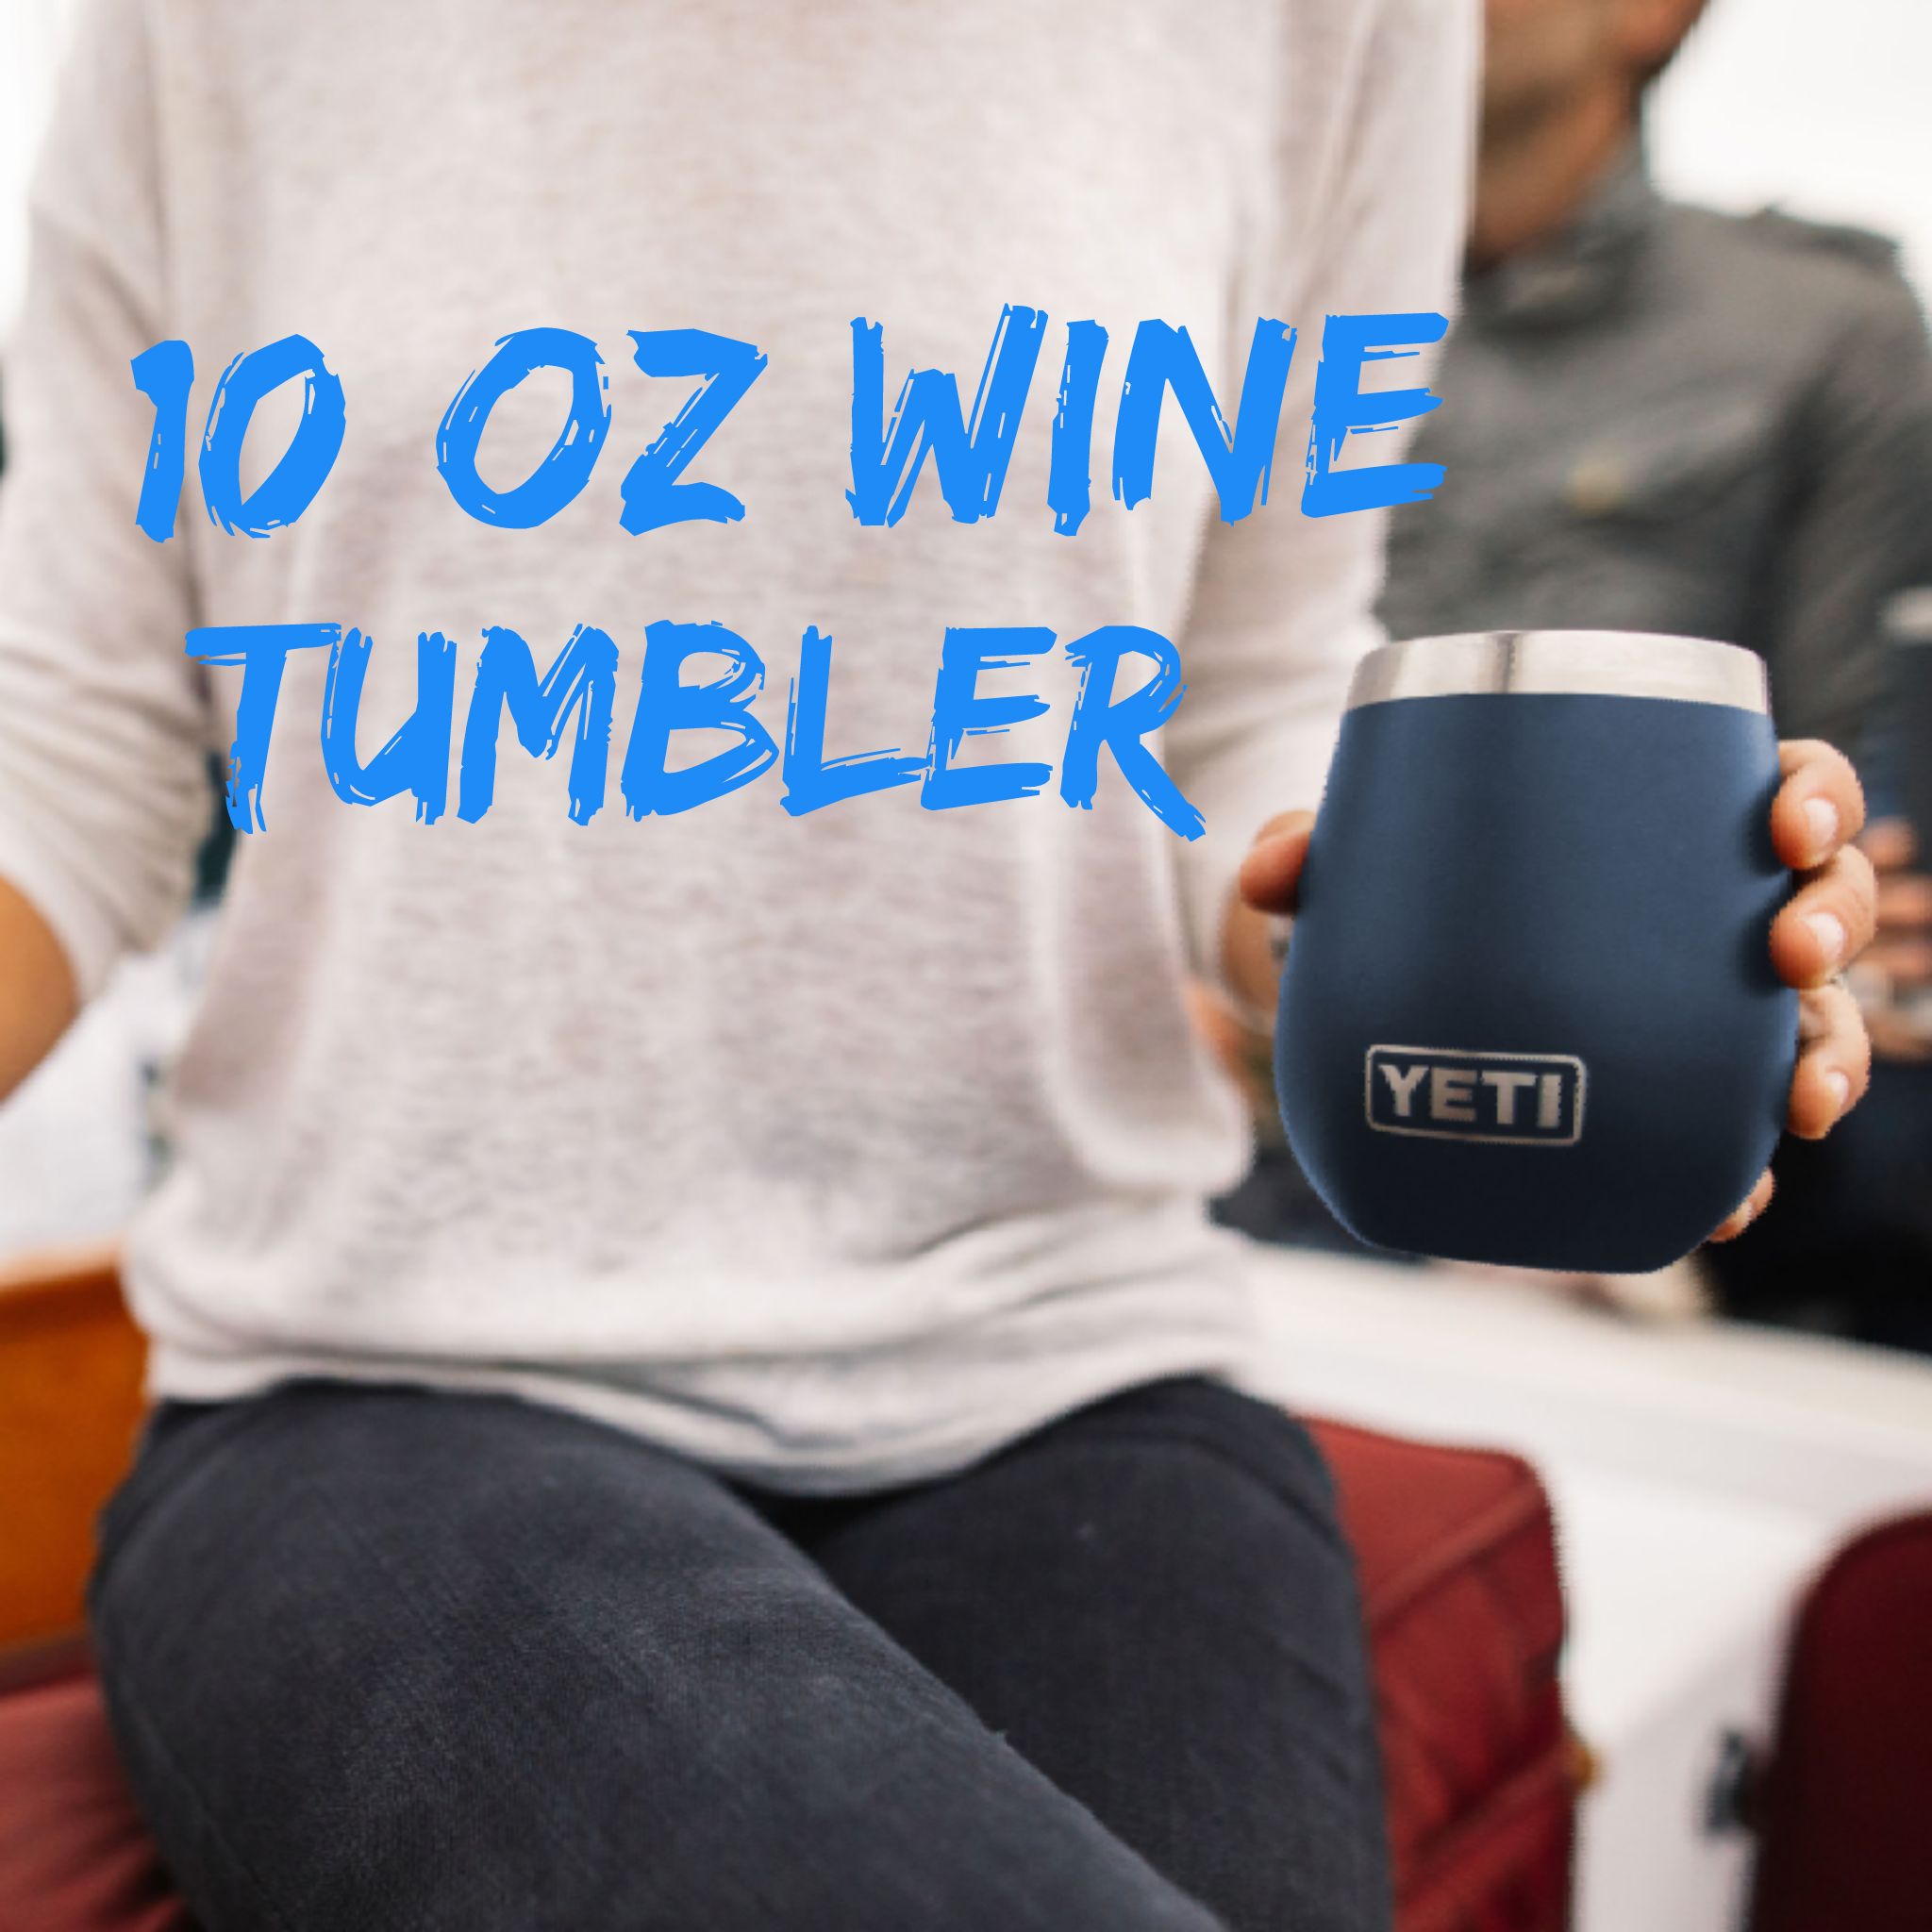 Yeti 10oz Wine Tumbler